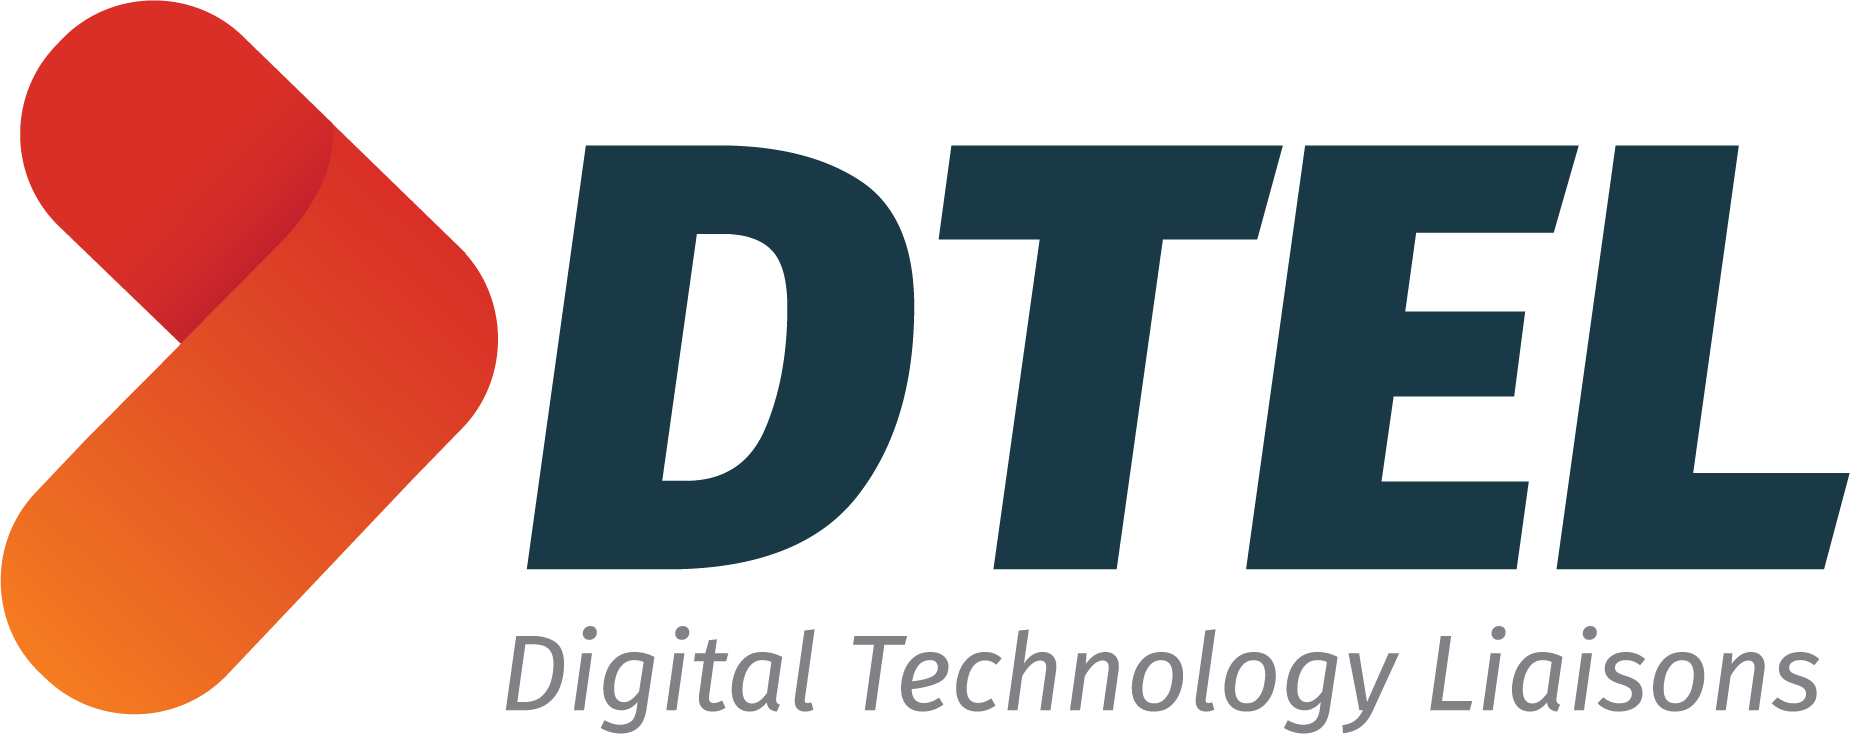 DTEL Telecommunications